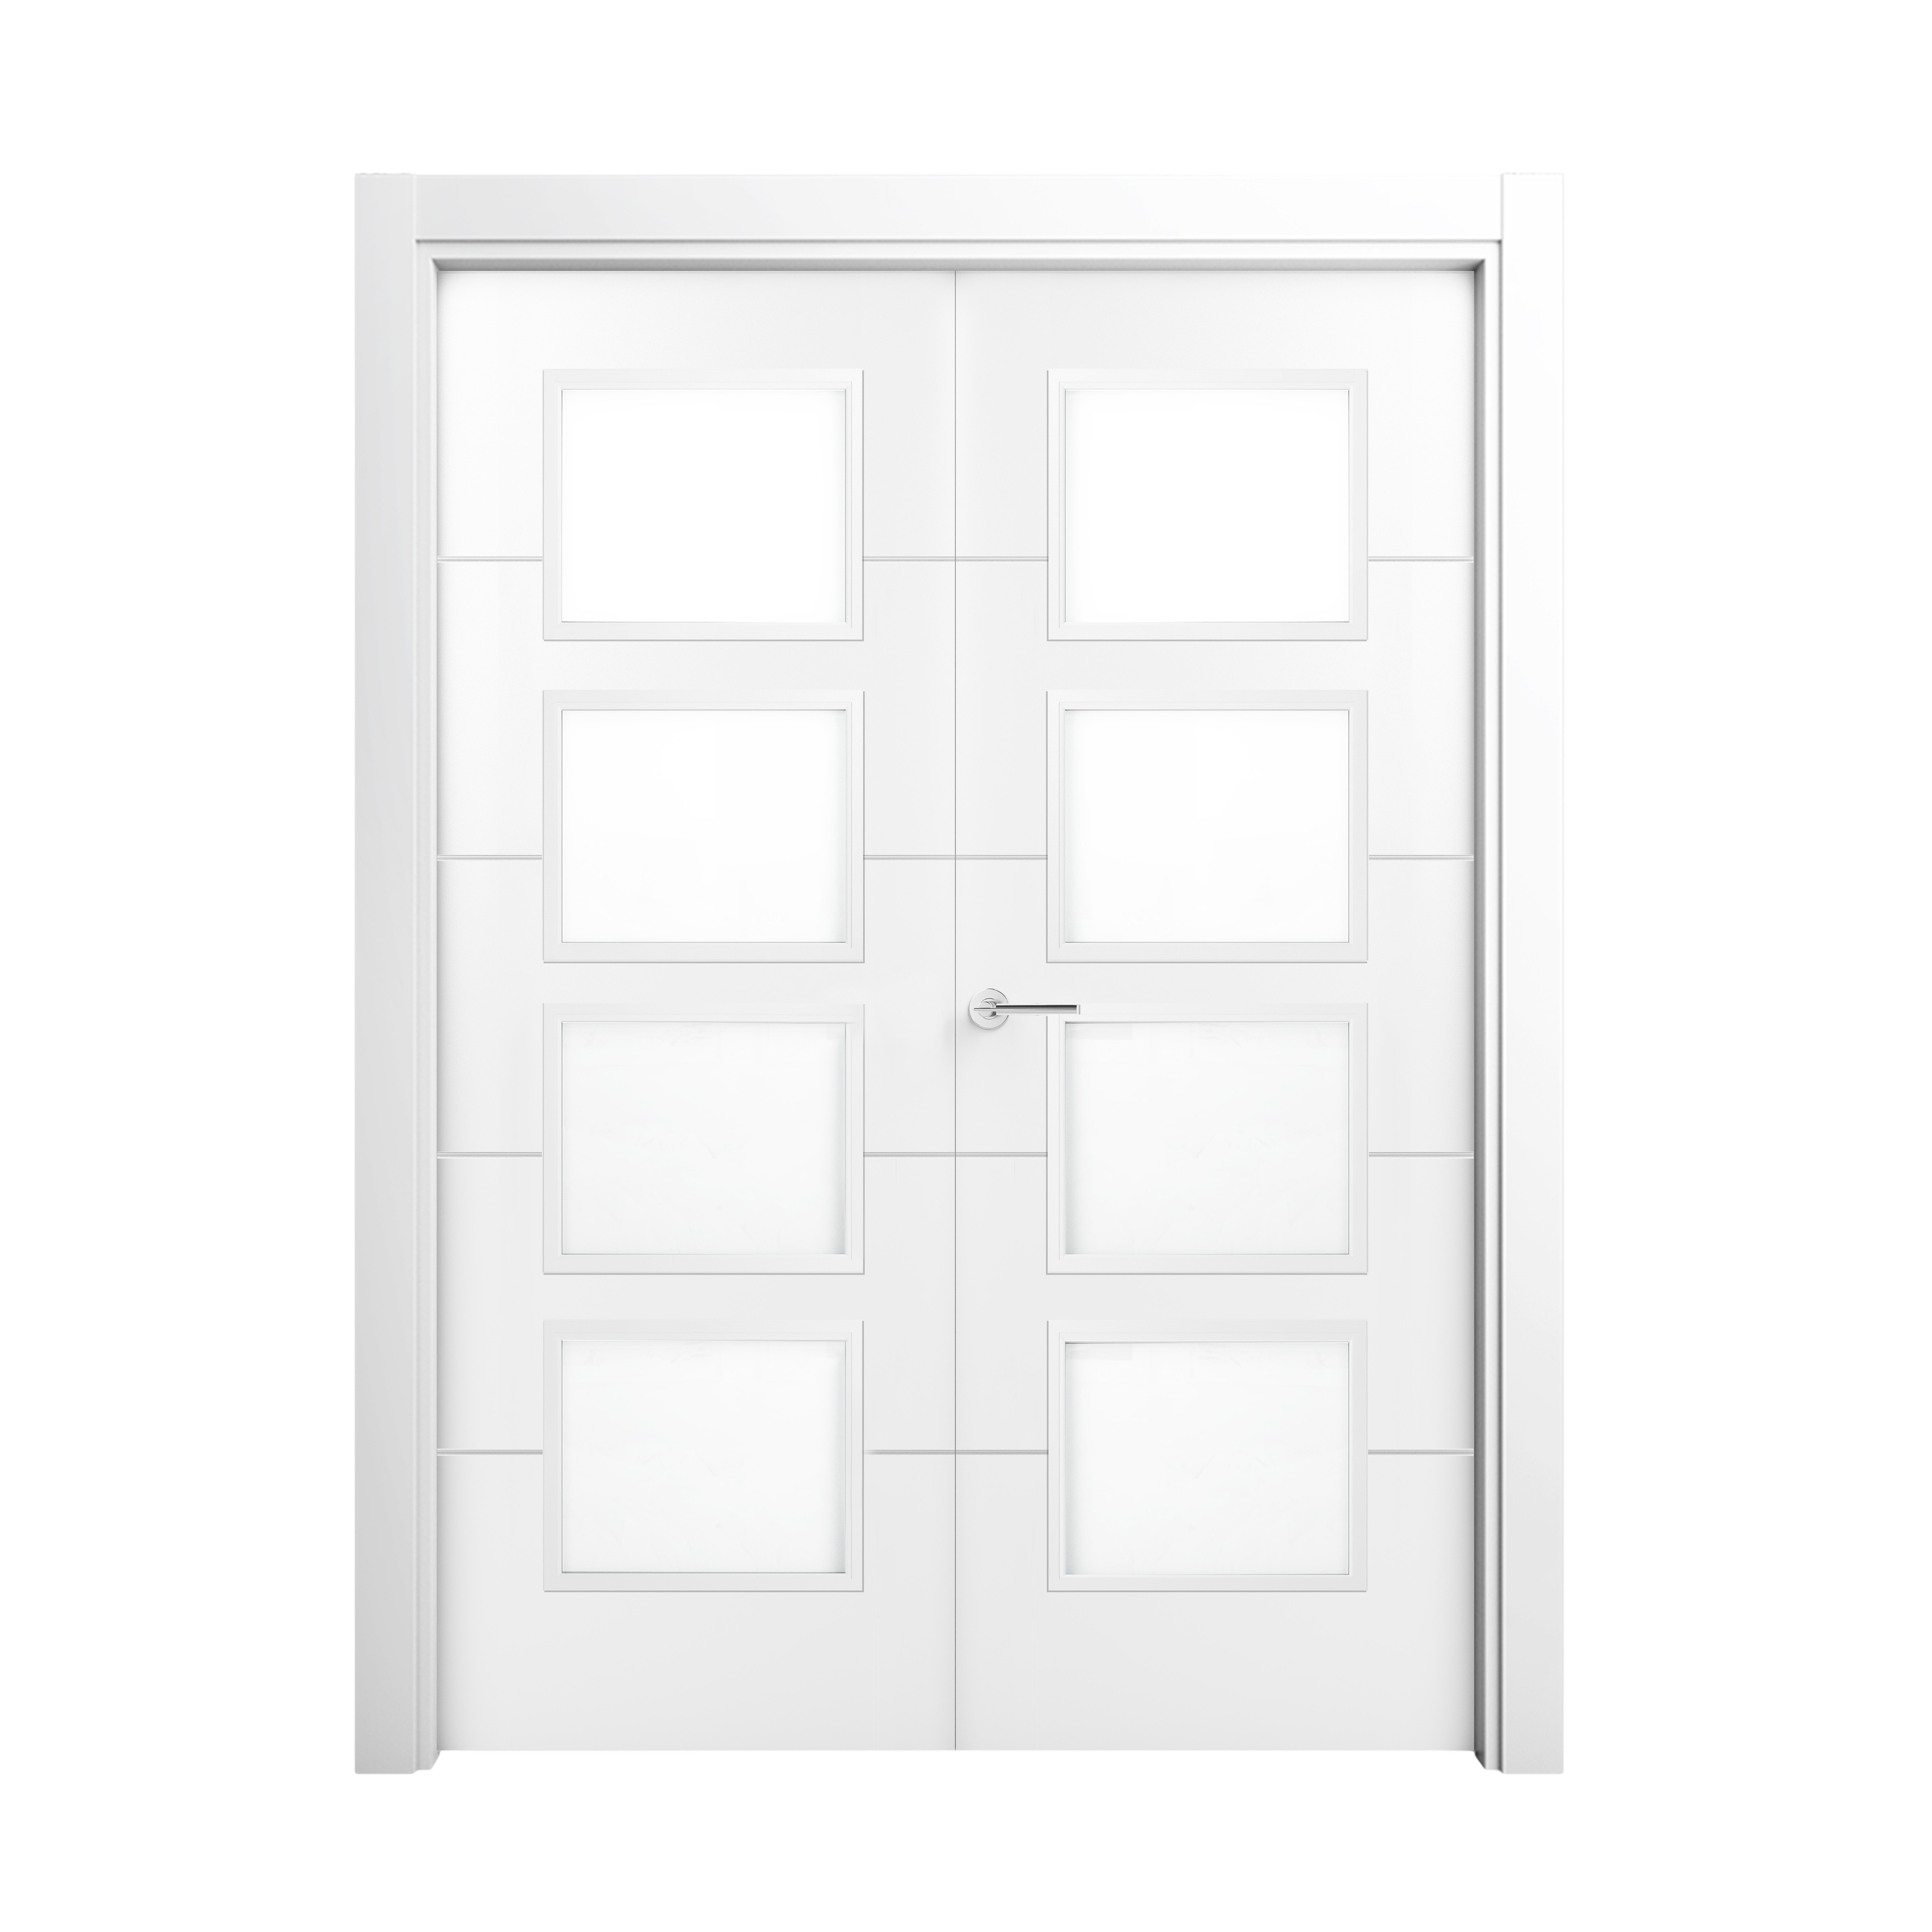 Puerta abatible lucerna blanca premium apertura derecha de 9x105 cm